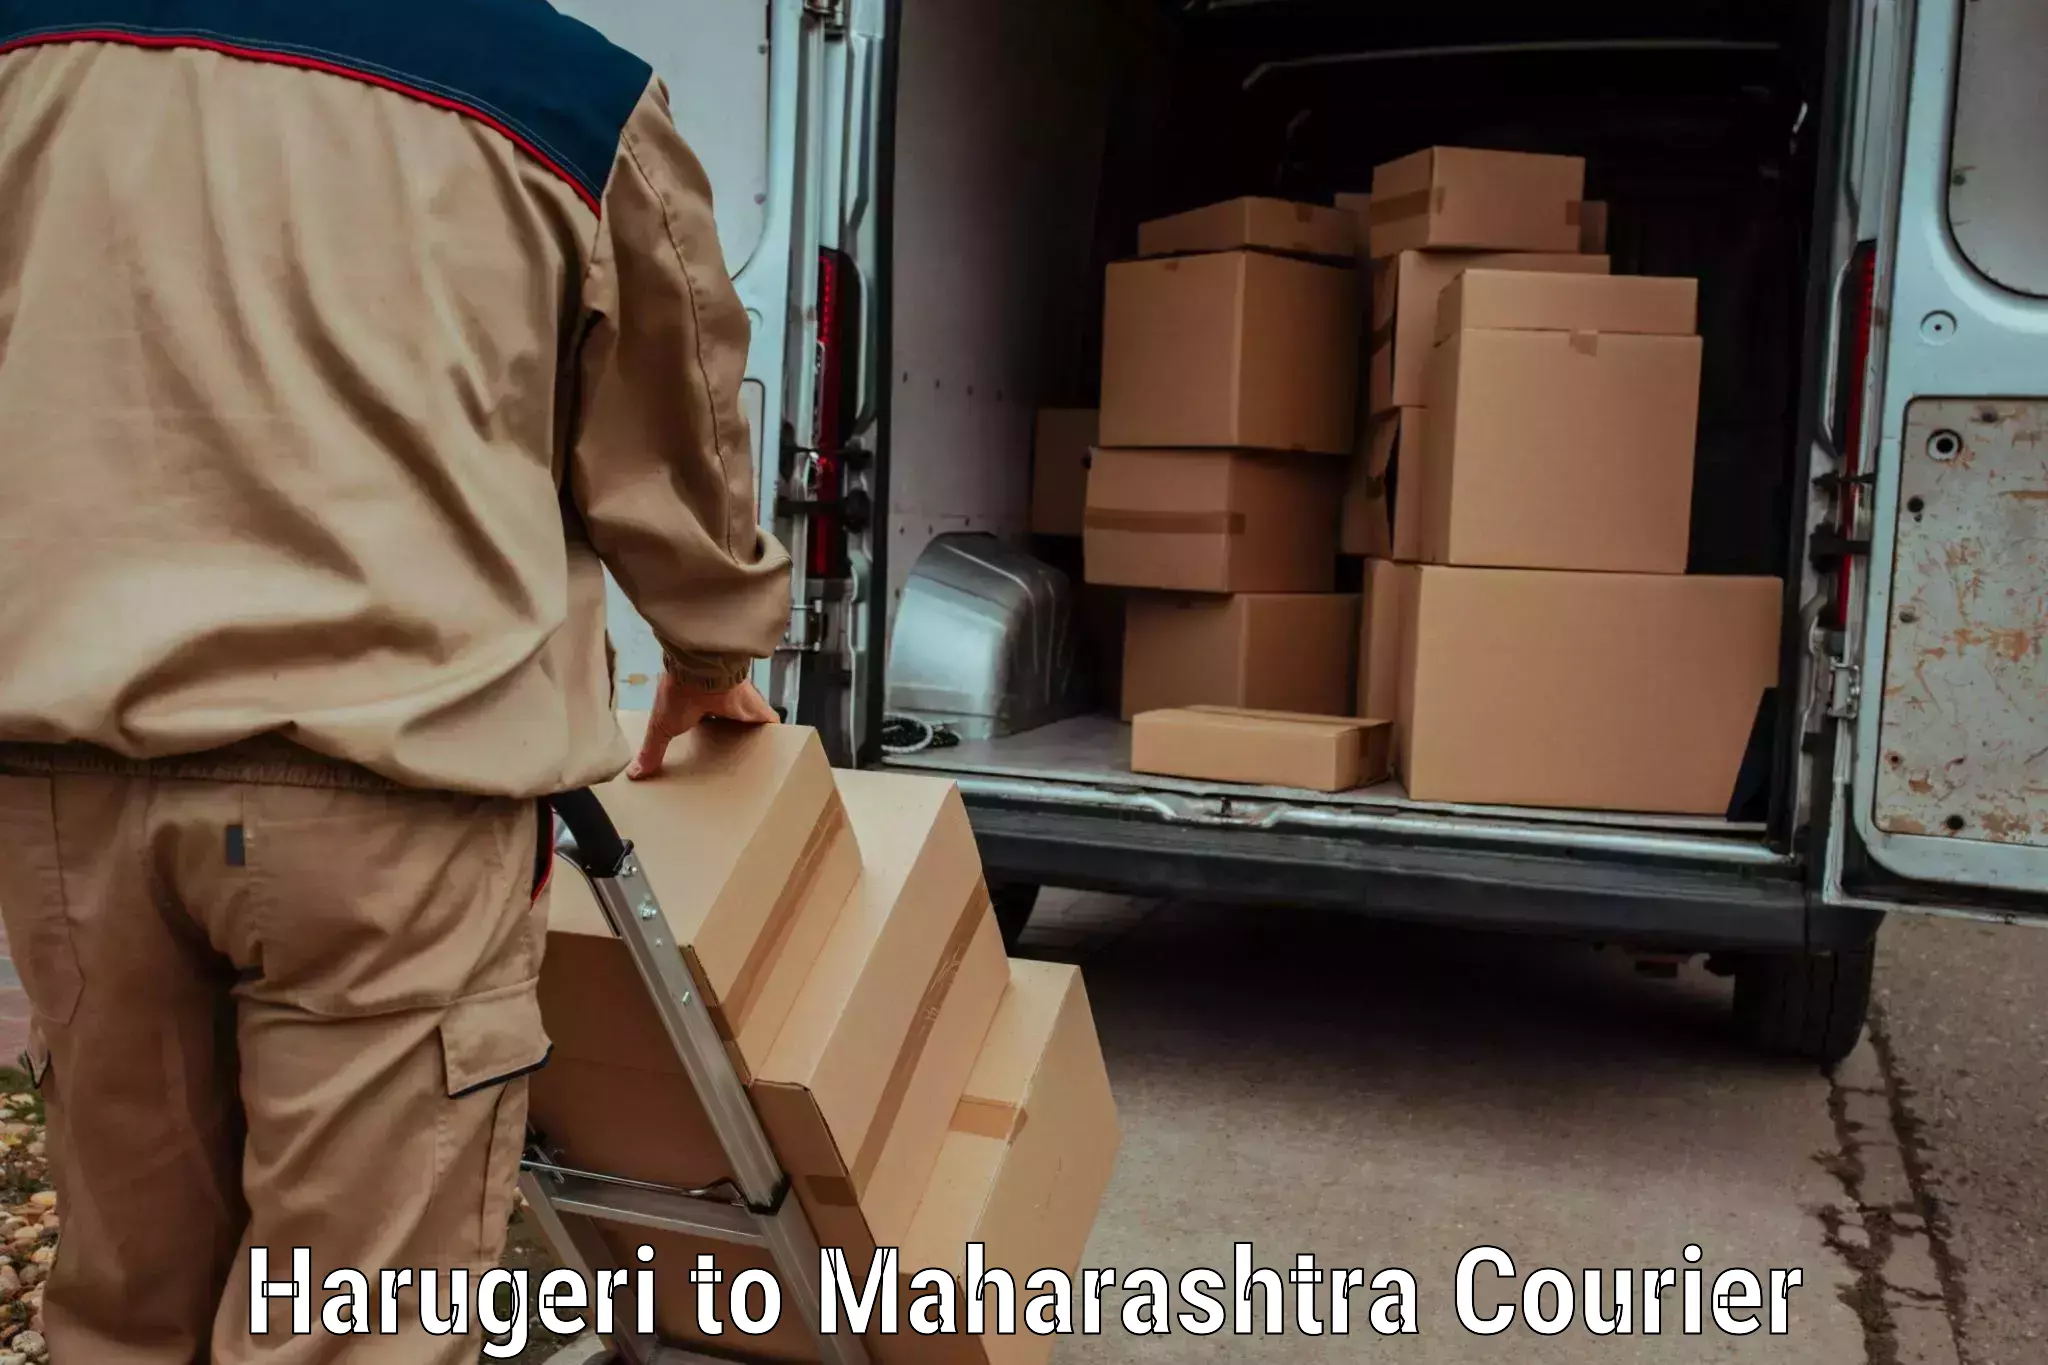 Courier service comparison Harugeri to Sindhudurg